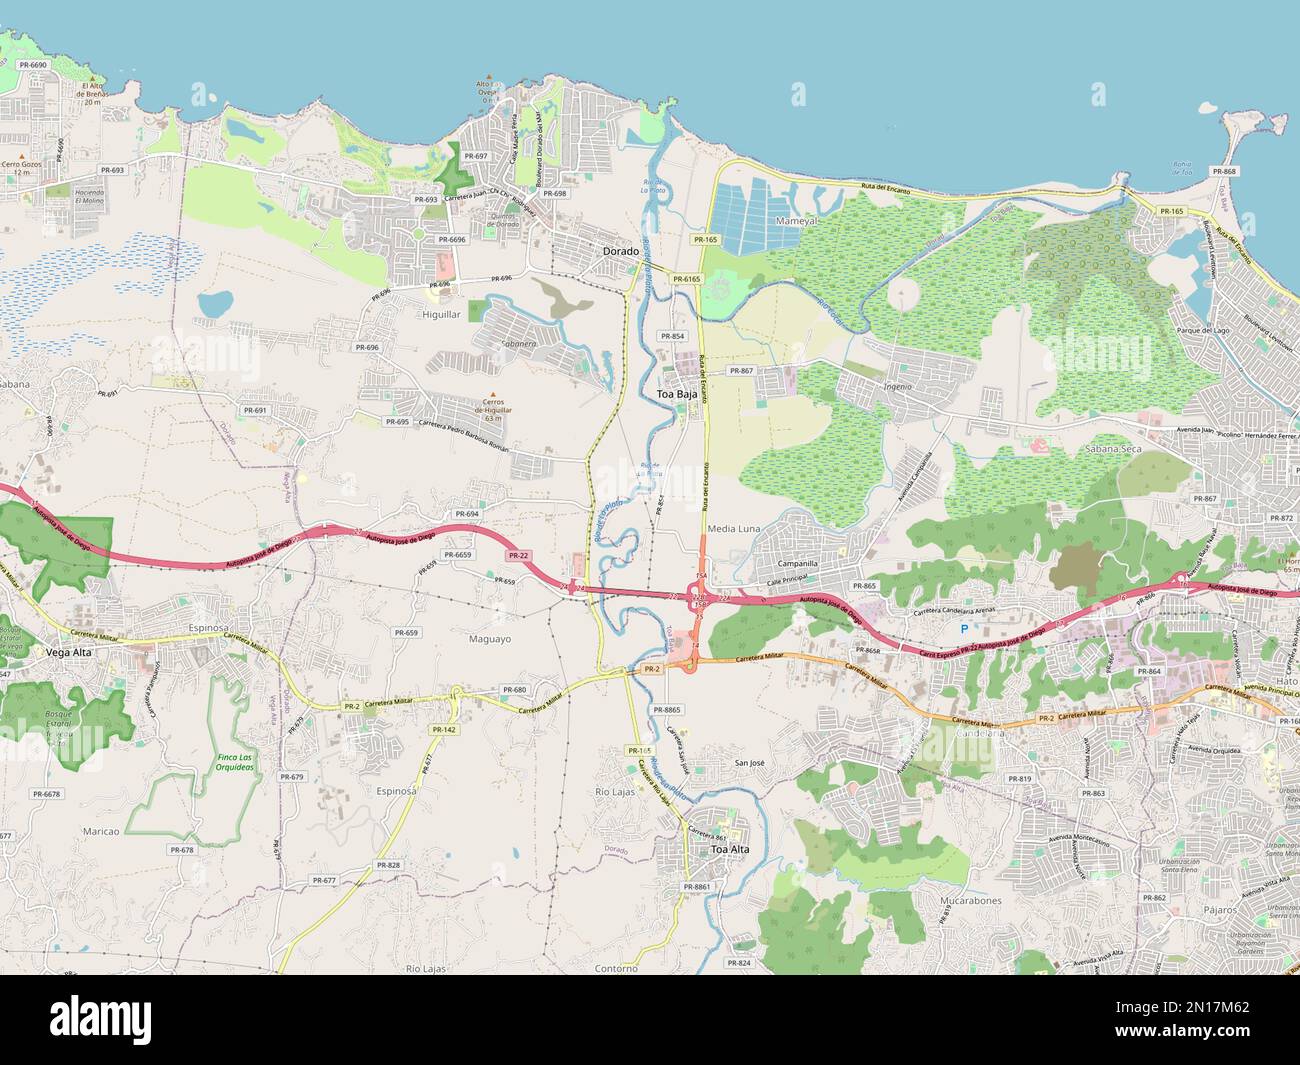 Dorado, municipality of Puerto Rico. Open Street Map Stock Photo - Alamy